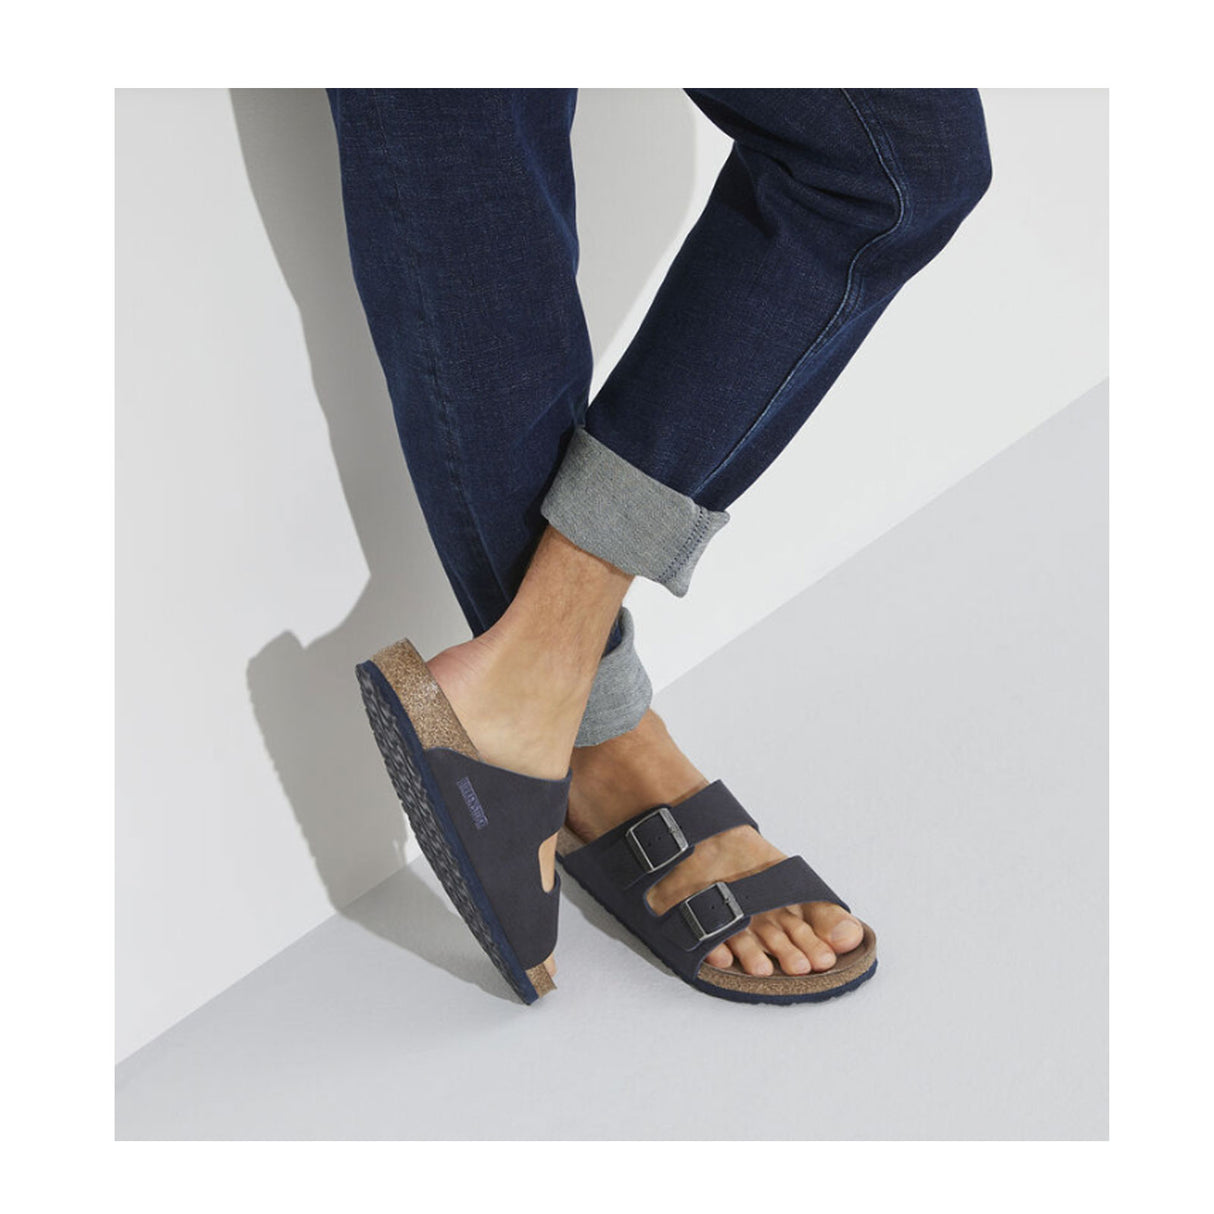 Birkenstock Arizona Vegan Sandal (Men) - Desert Dust Indigo Blue Microfiber Sandals - Slide - The Heel Shoe Fitters